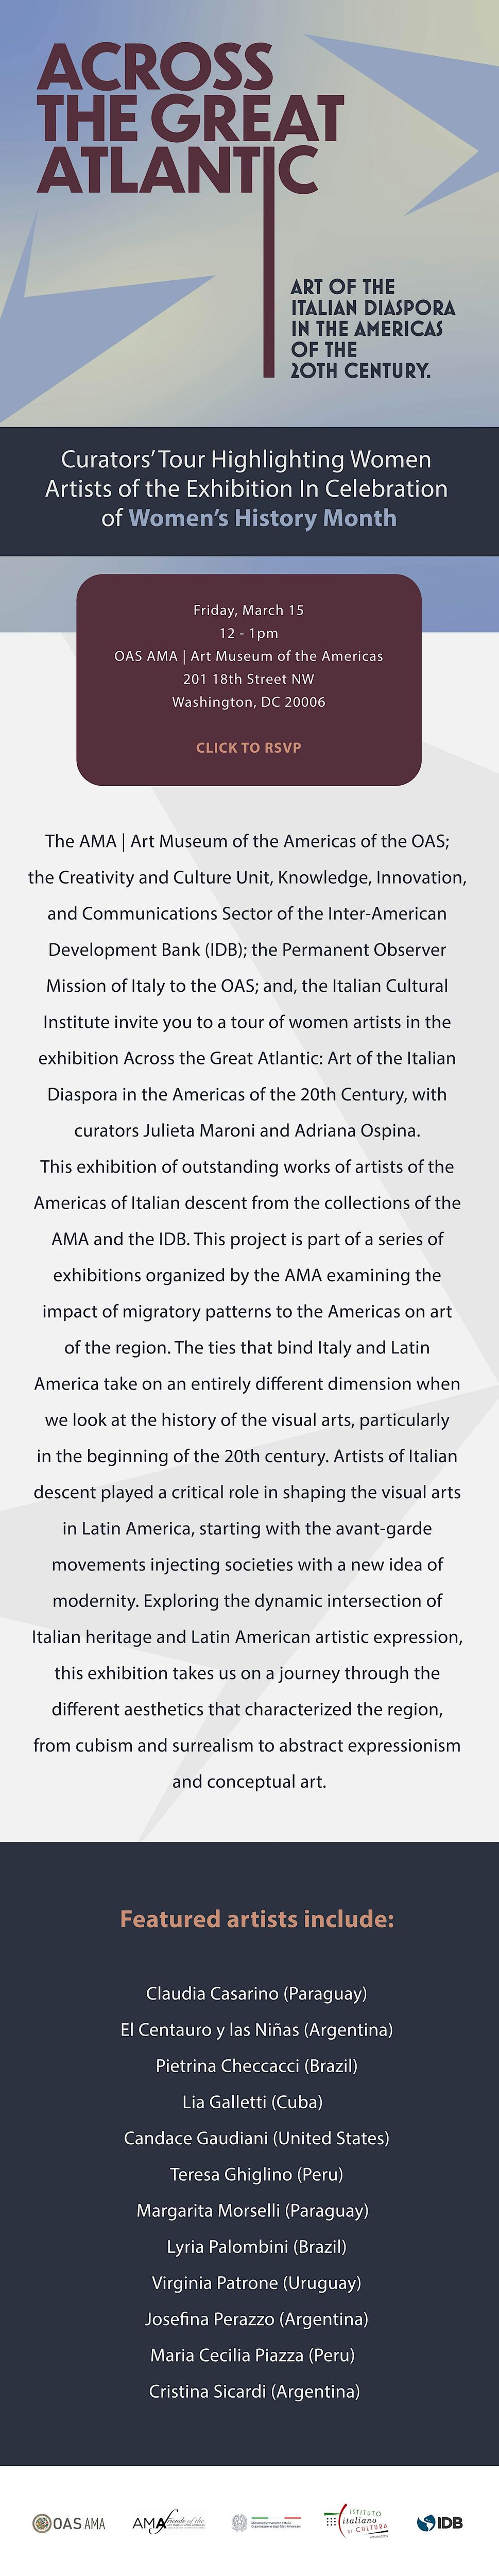 Curators' Tour of Across the Great Atlantic: Art of the Italian Diaspora